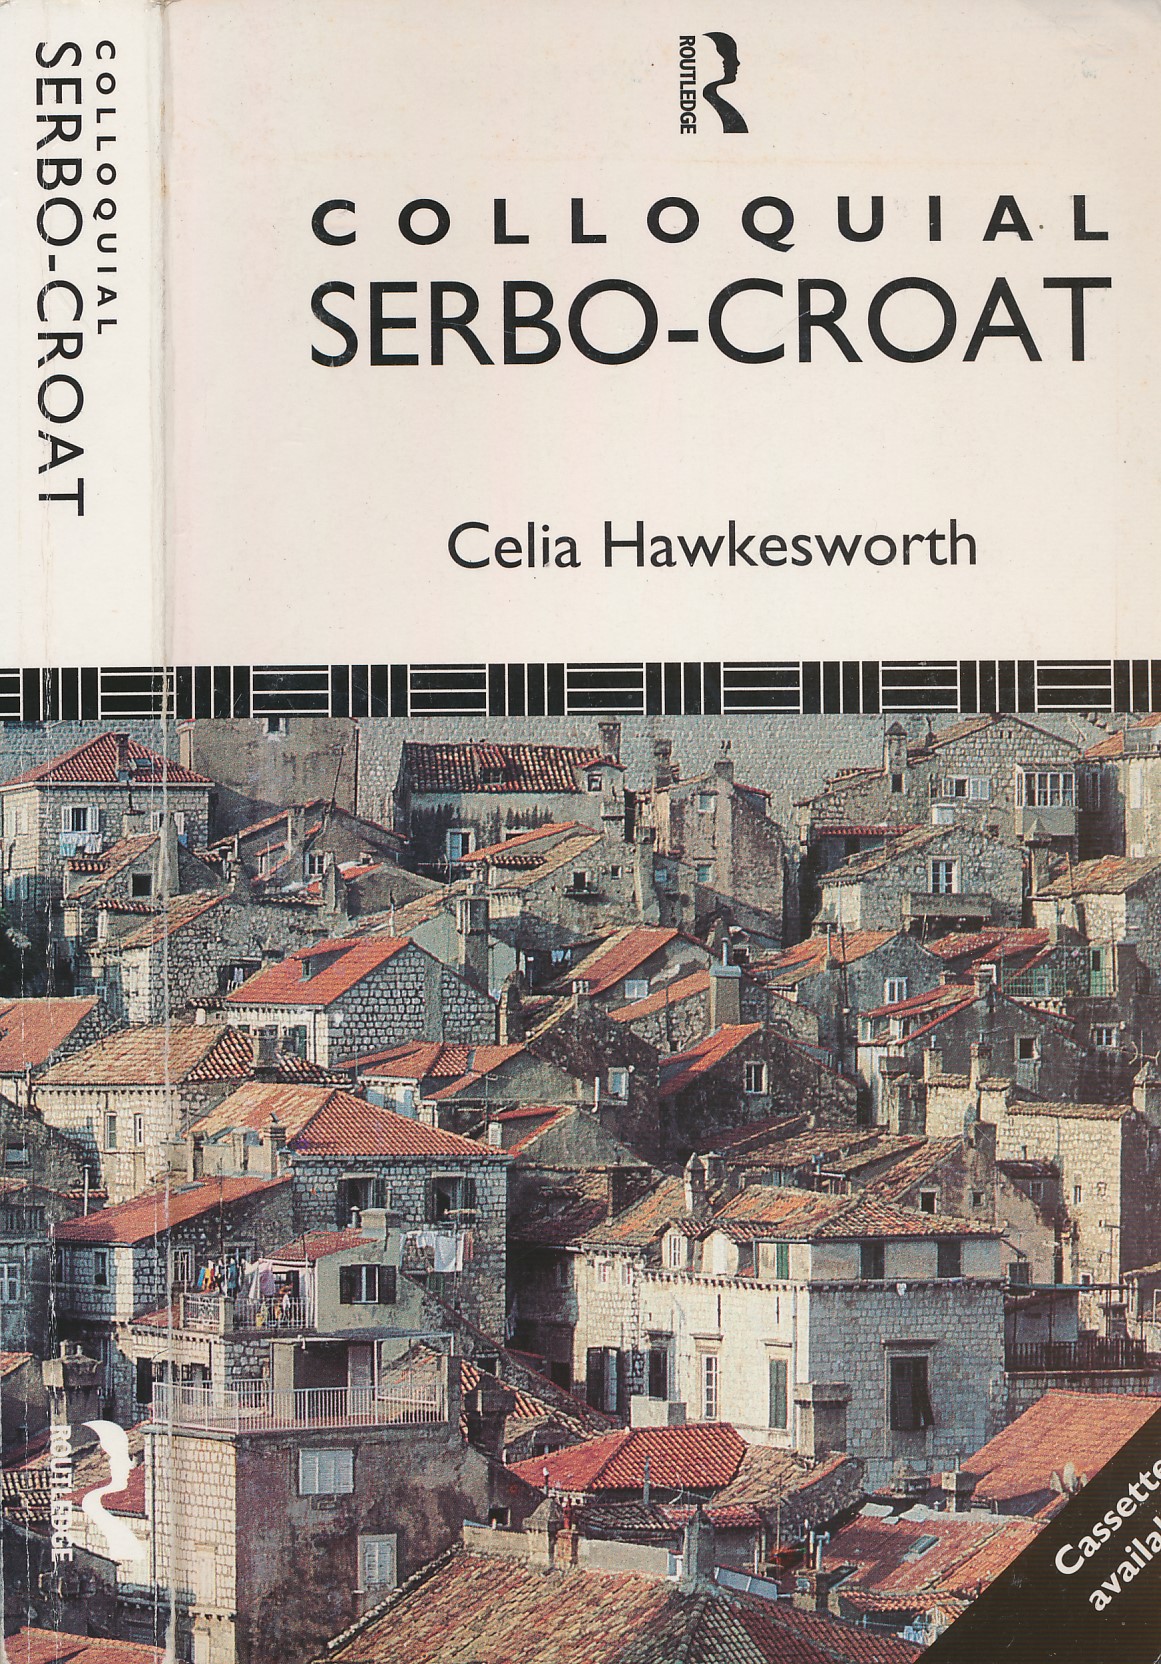 Colloquial Serbo-croat